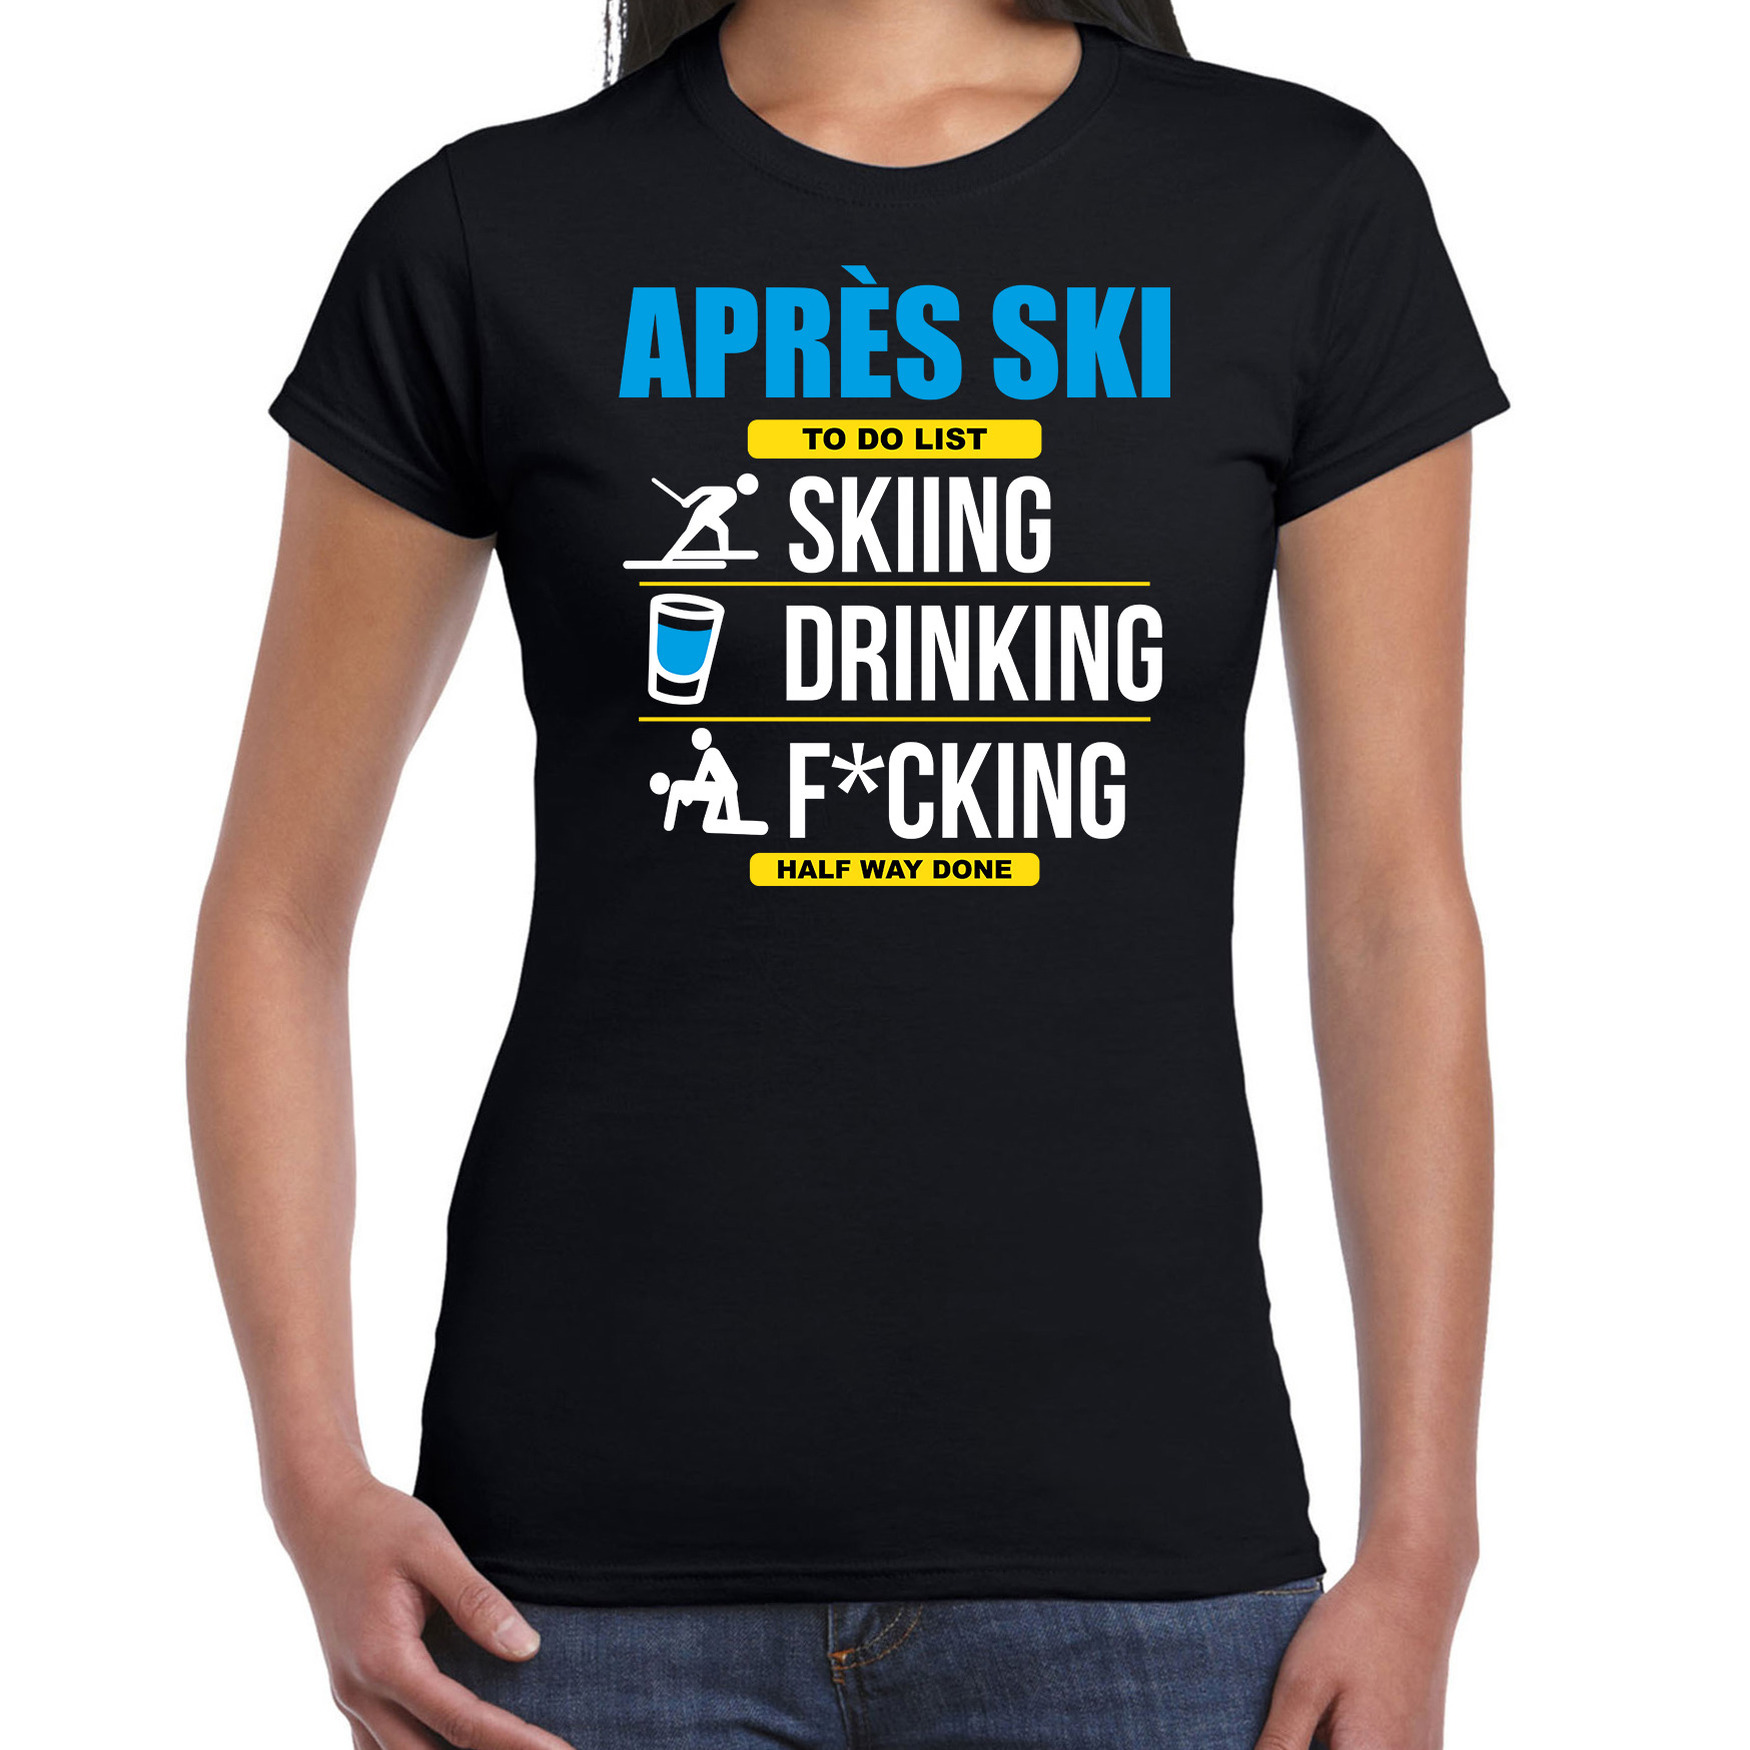 Apres ski t-shirt winterport to do list zwart dames Wintersport shirt Foute apres ski outfit